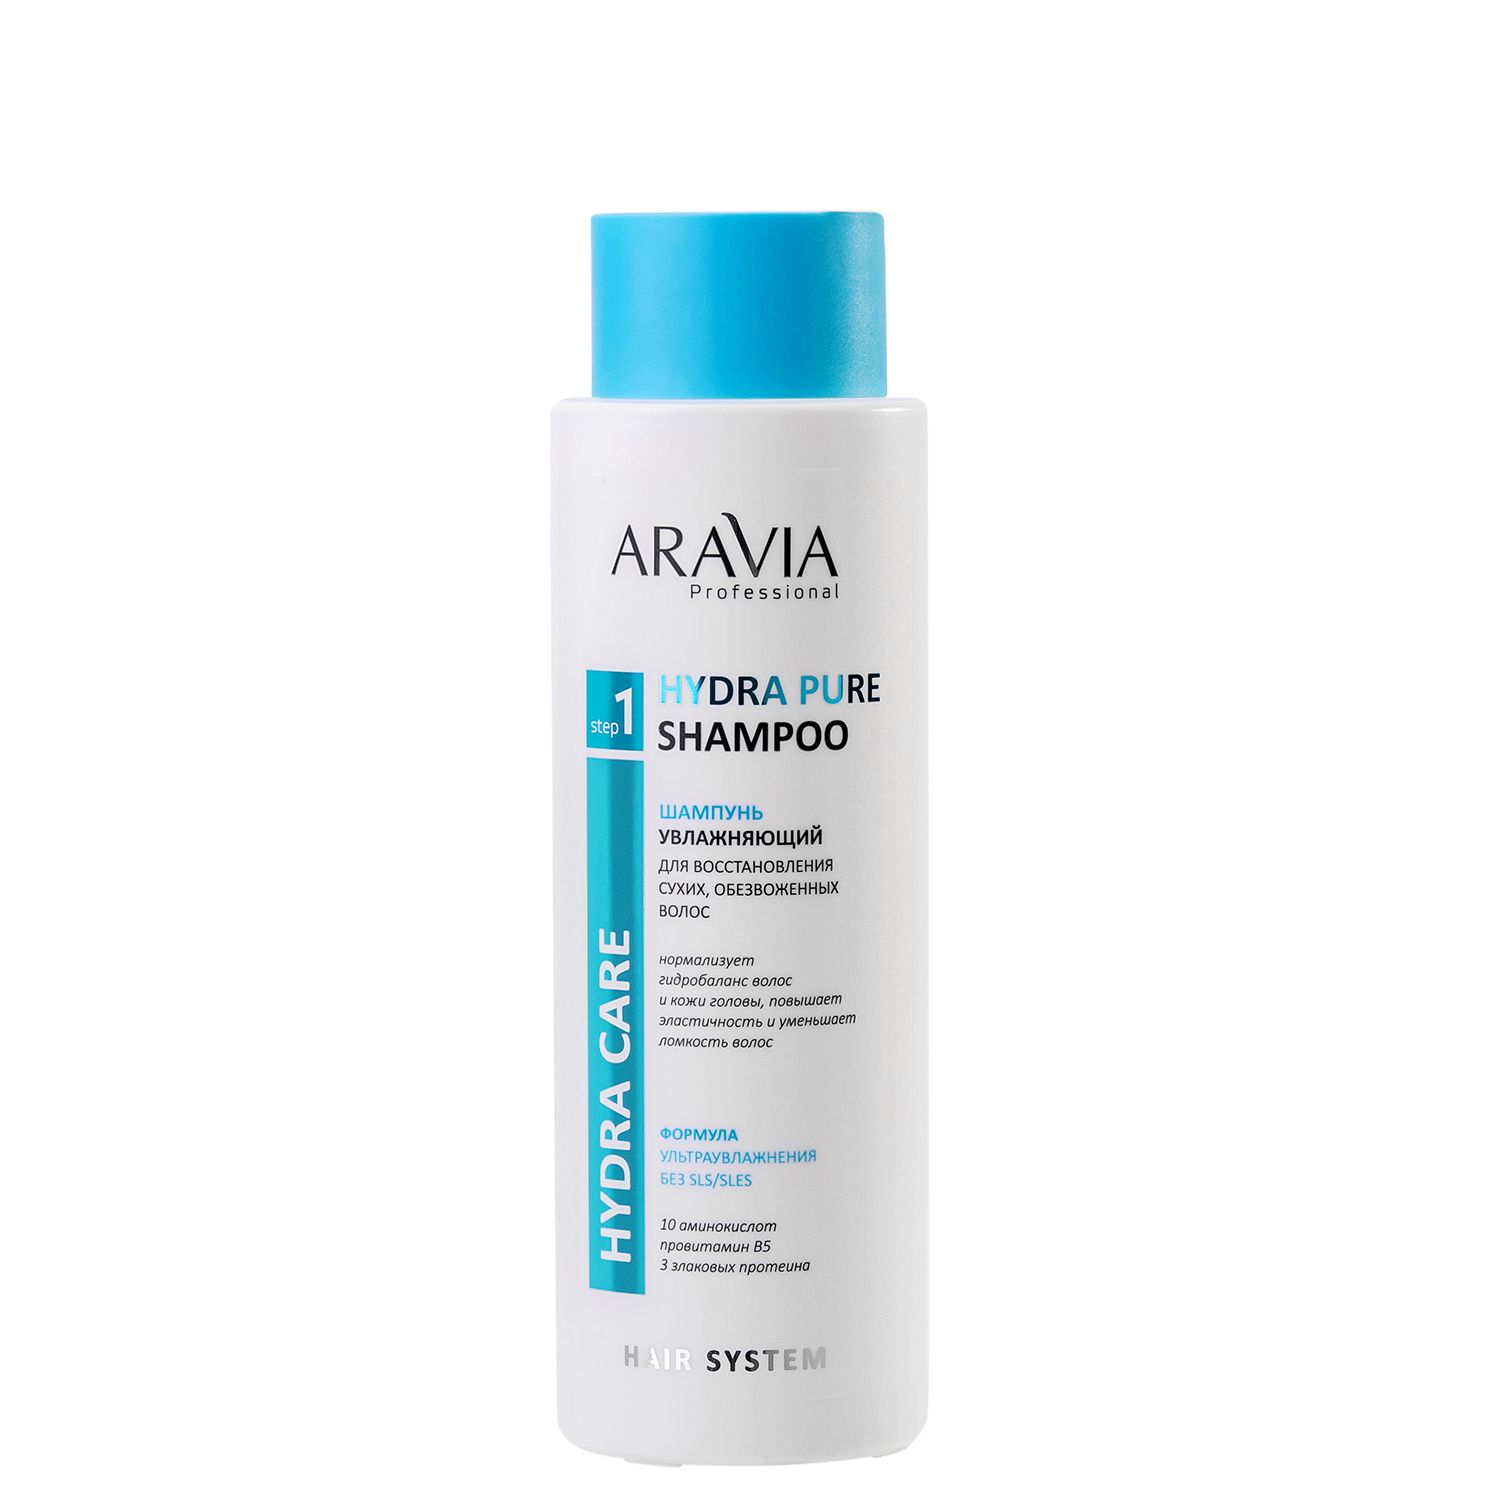 Aravia шампунь увлажняющий для восстановления сухих обезвоженных волос 400 мл (р)